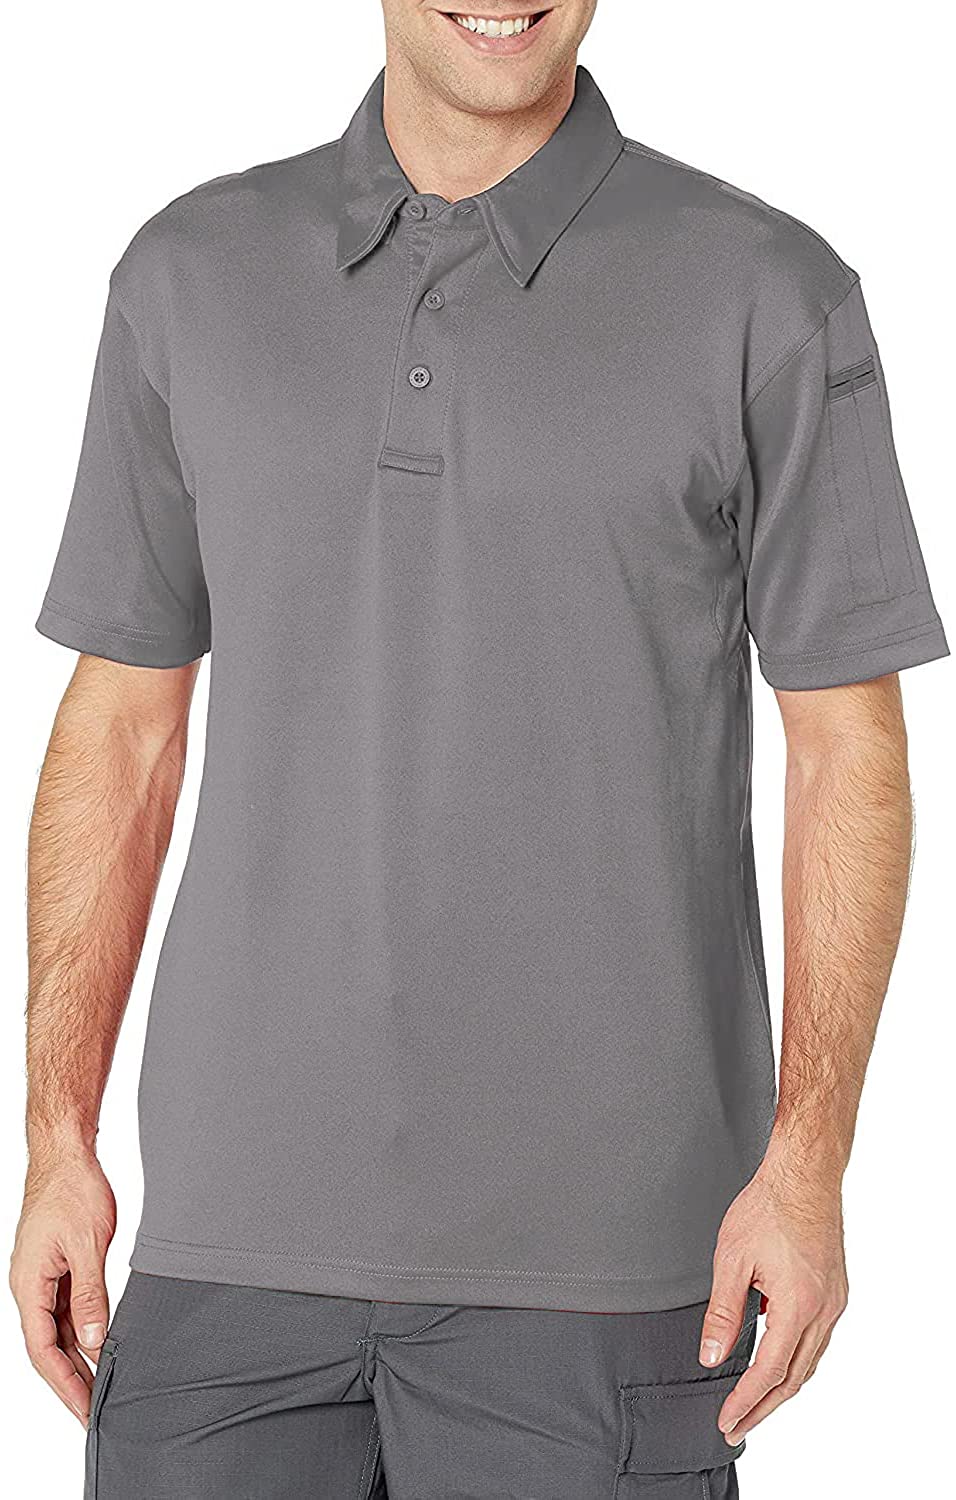 Propper Men's I.C.E Short Sleeve Performance Polo Shirt